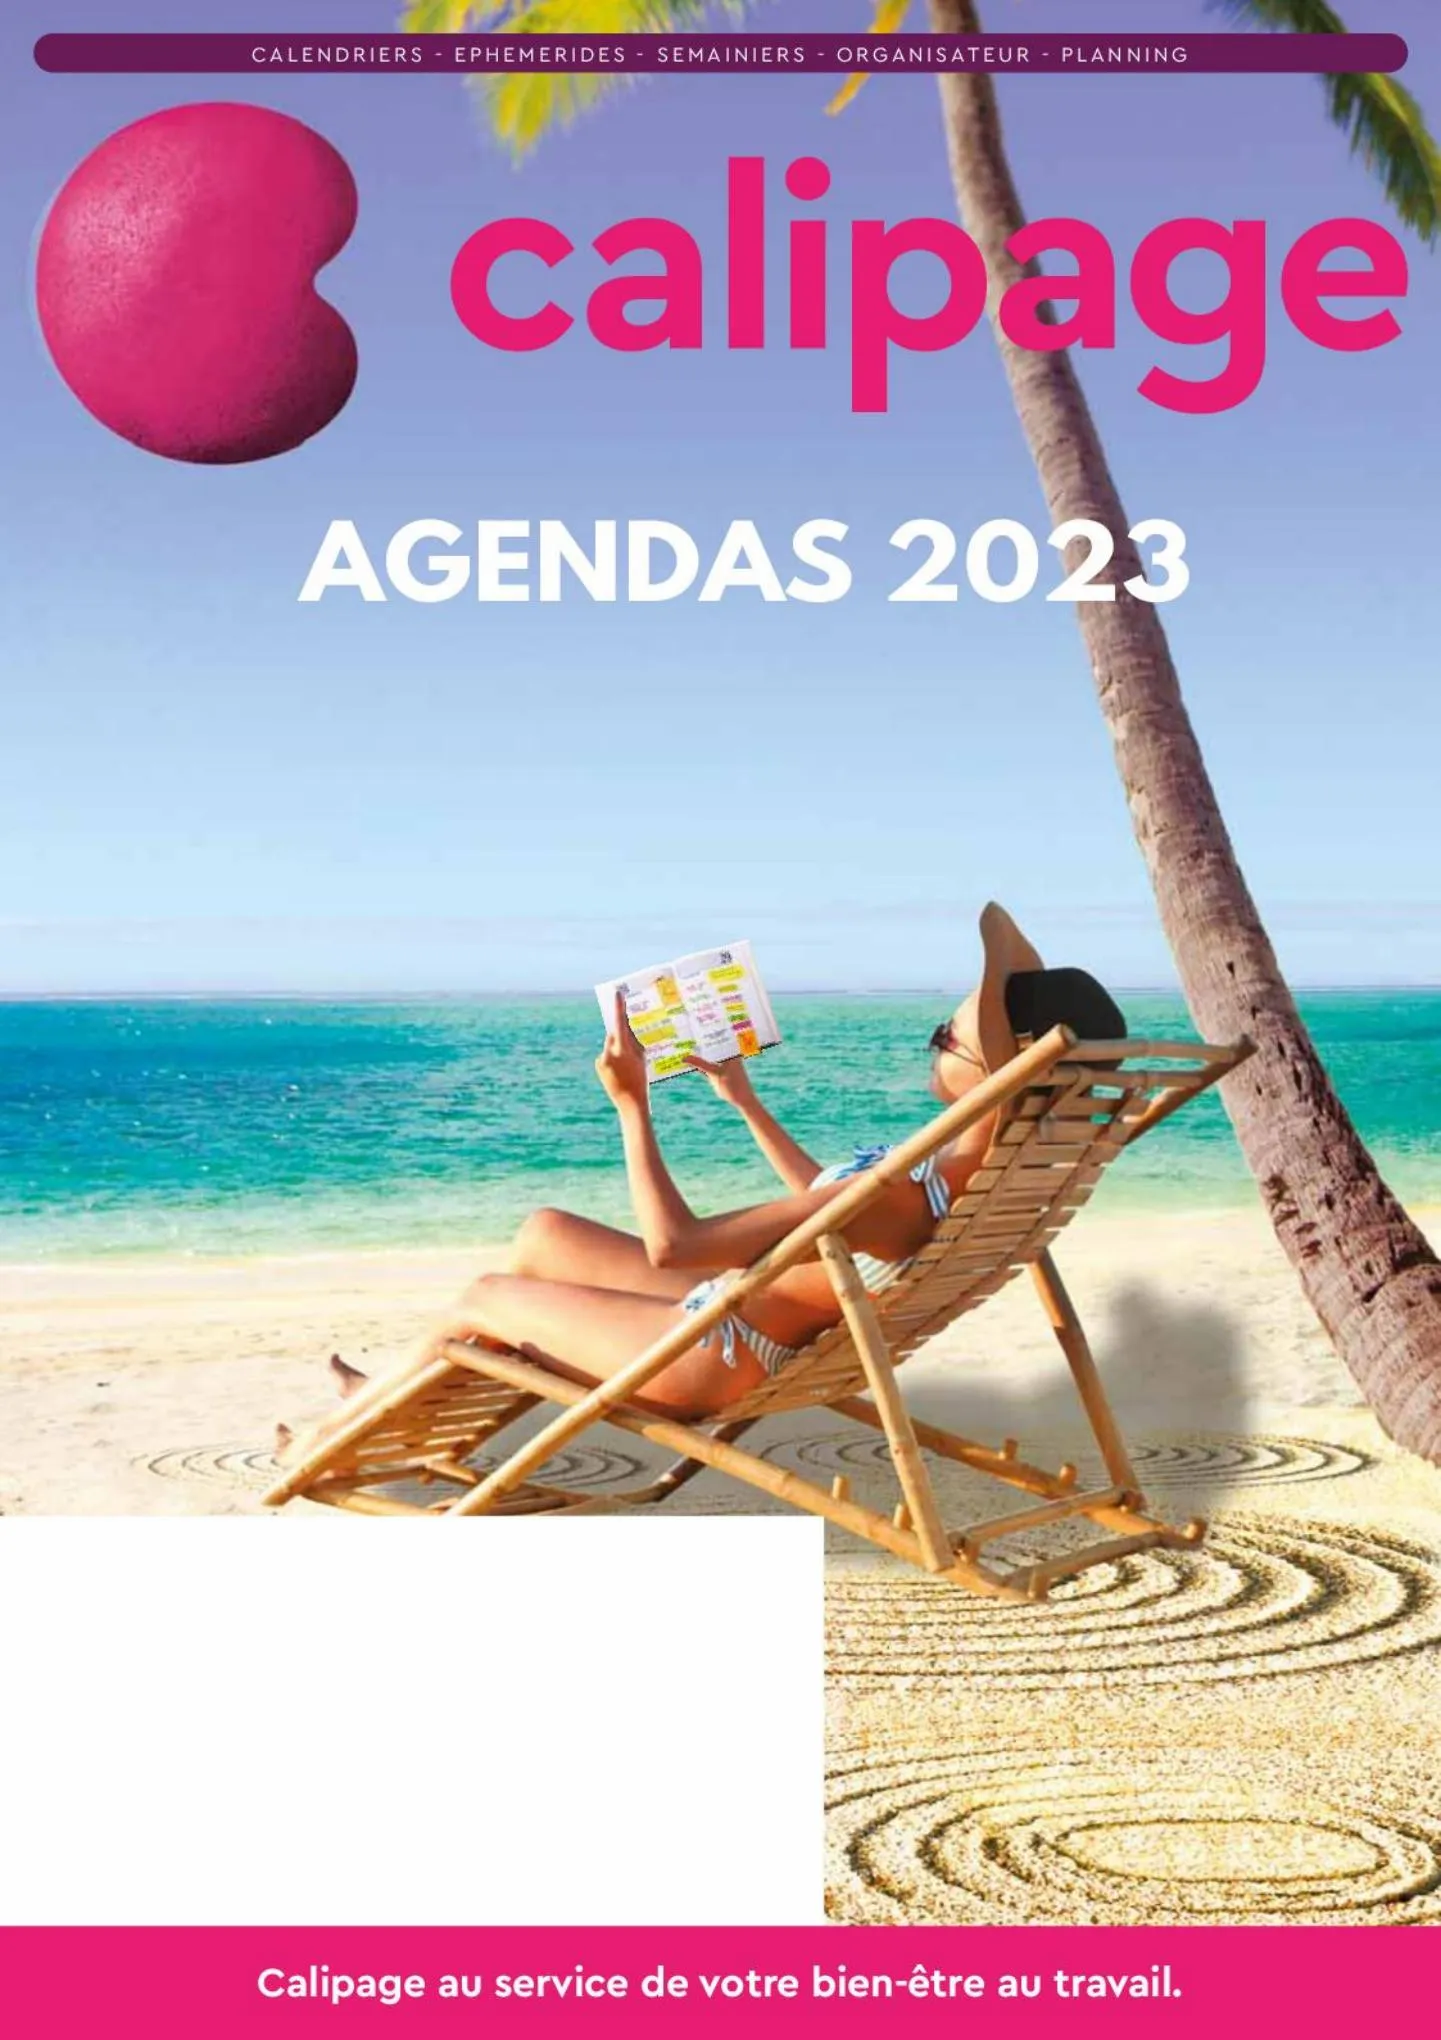 Catalogue Catalogue Agendas 2023 Calipage, page 00001